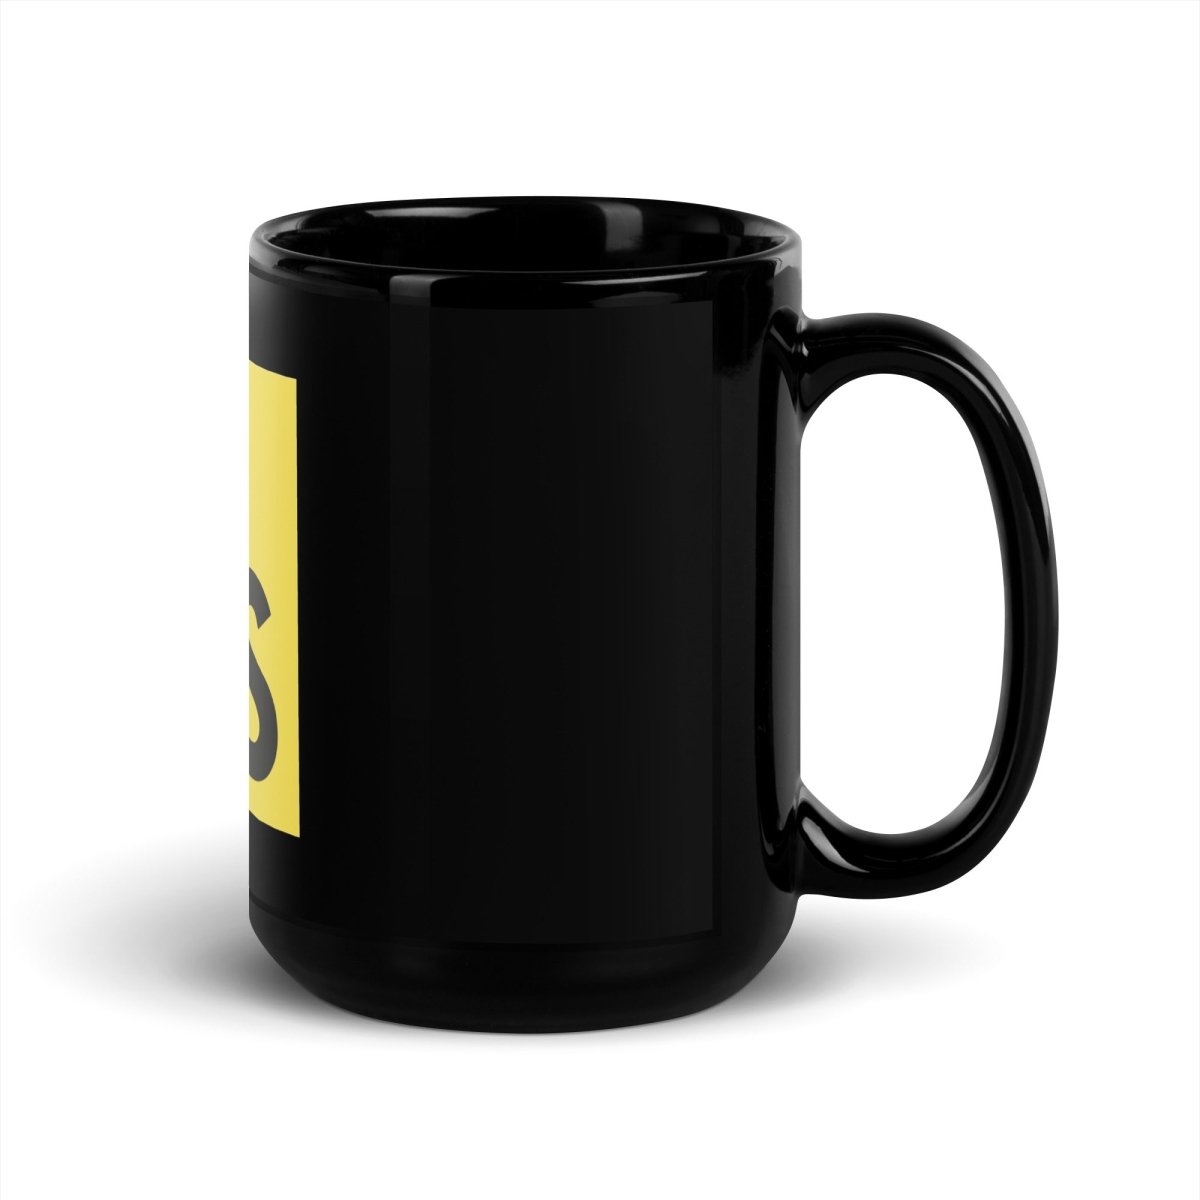 JavaScript Black Glossy Mug - AI Store